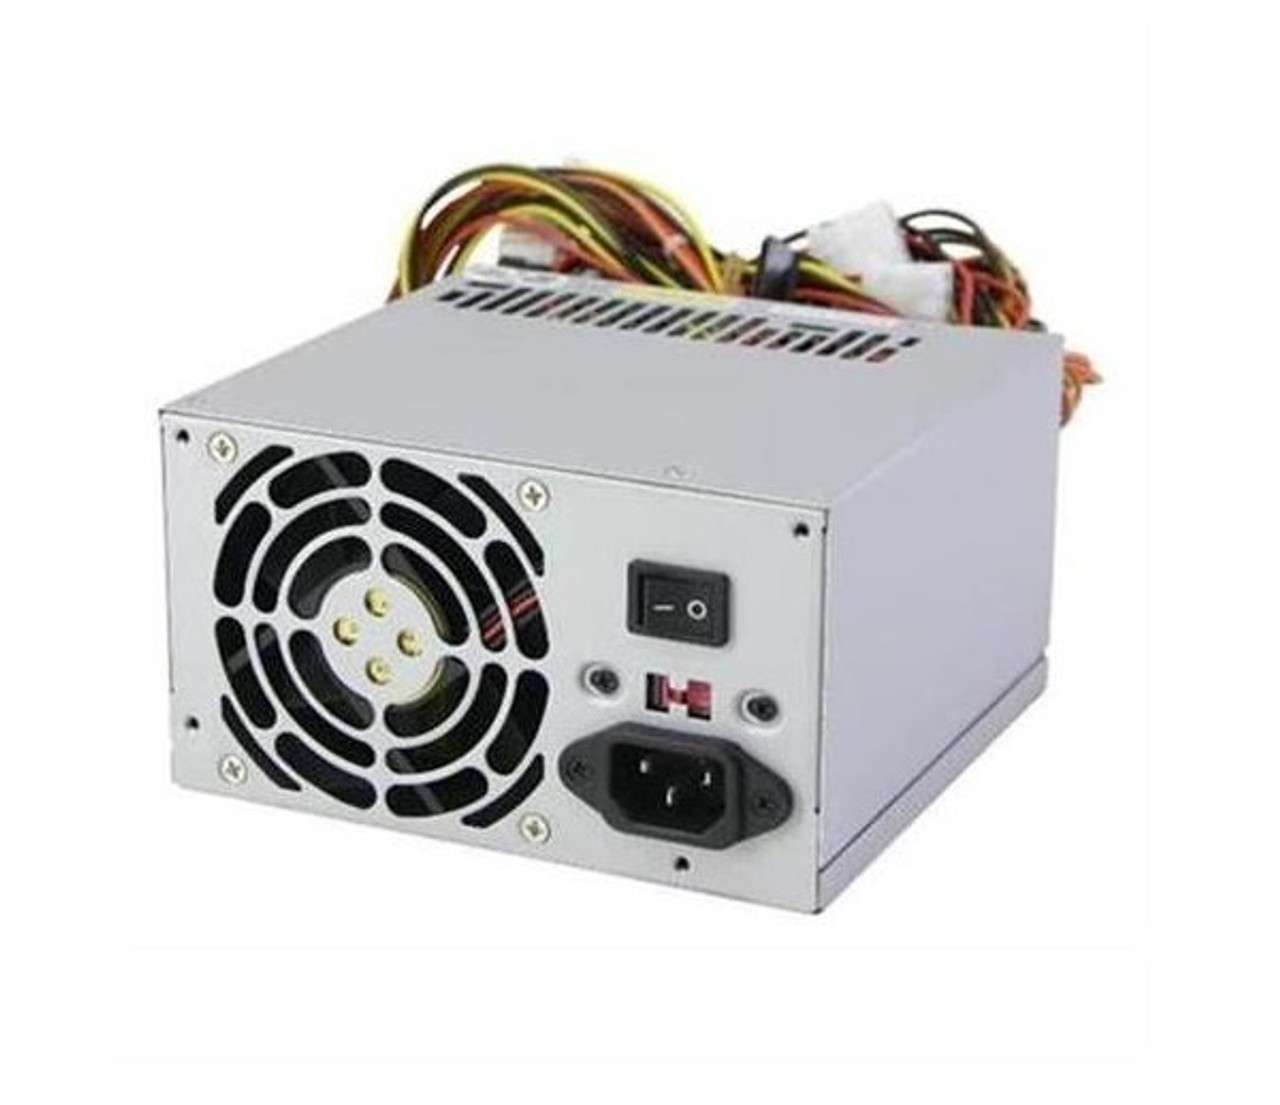 Q1273-60251 - HP 500-Watts Power Supply for DesignJet 4000/4500 Series Printer